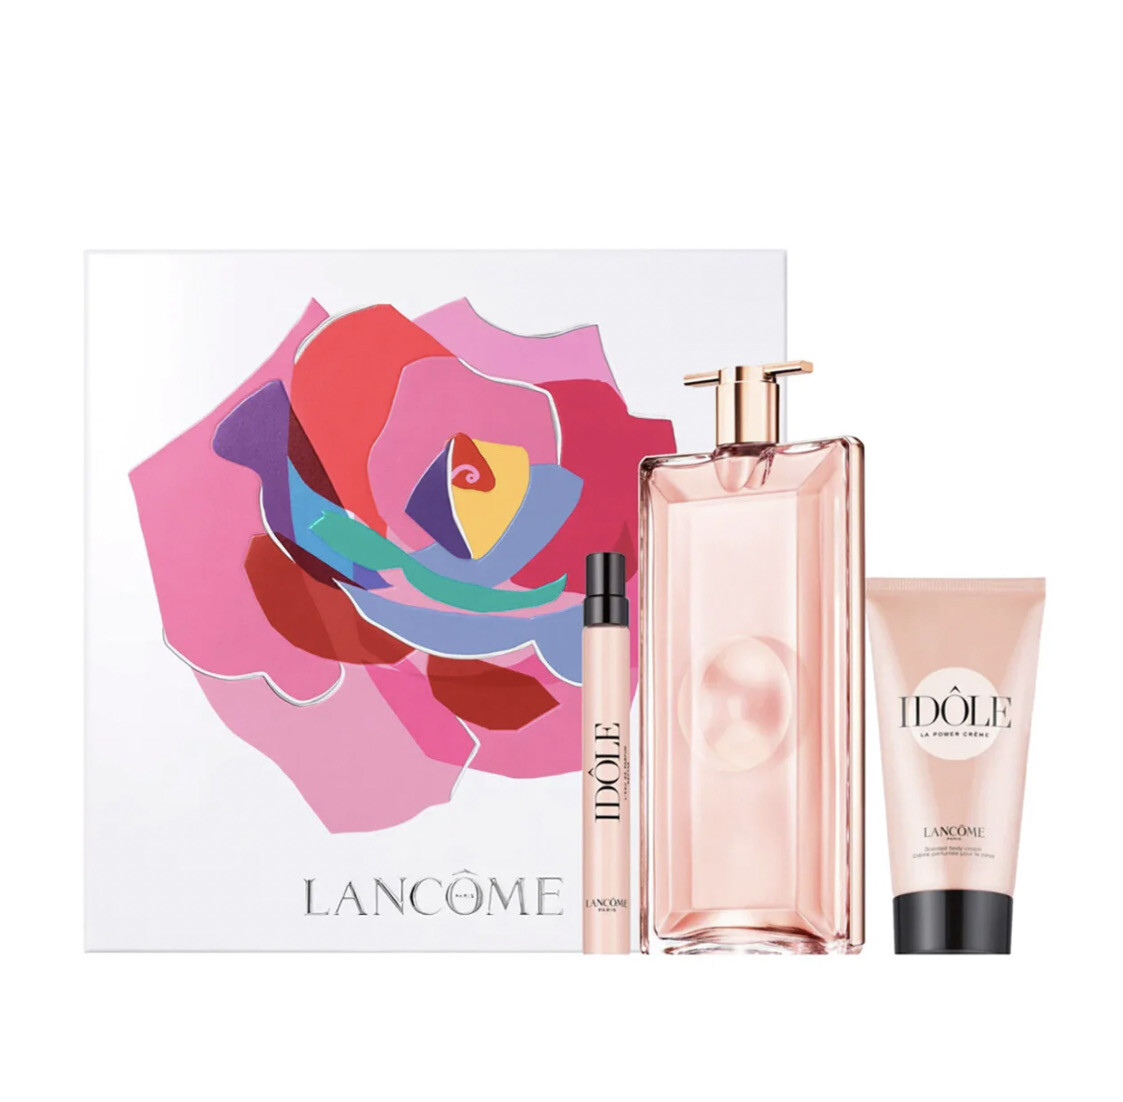 Lancôme - Idôle Perfume Set